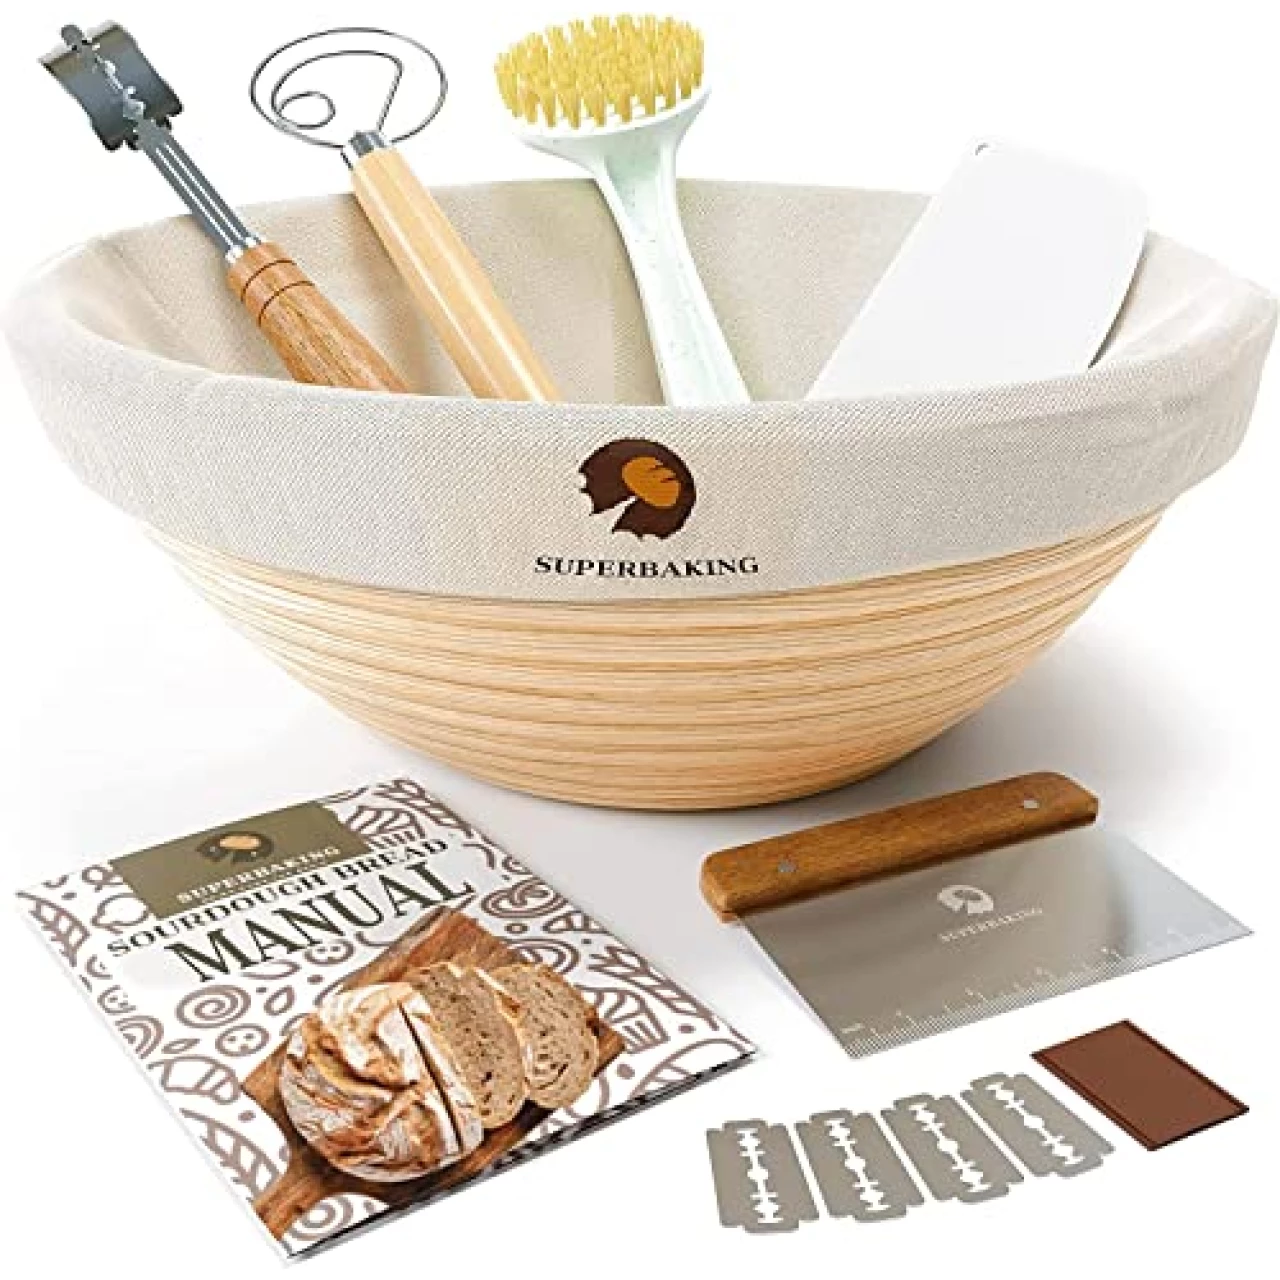 Superbaking Bread Proofing Basket, Round 9 inch Sourdough Starter Kit, Proofing Basket for Bread baking, Bread Making Supplies Tools, Banneton Basket Gift Set